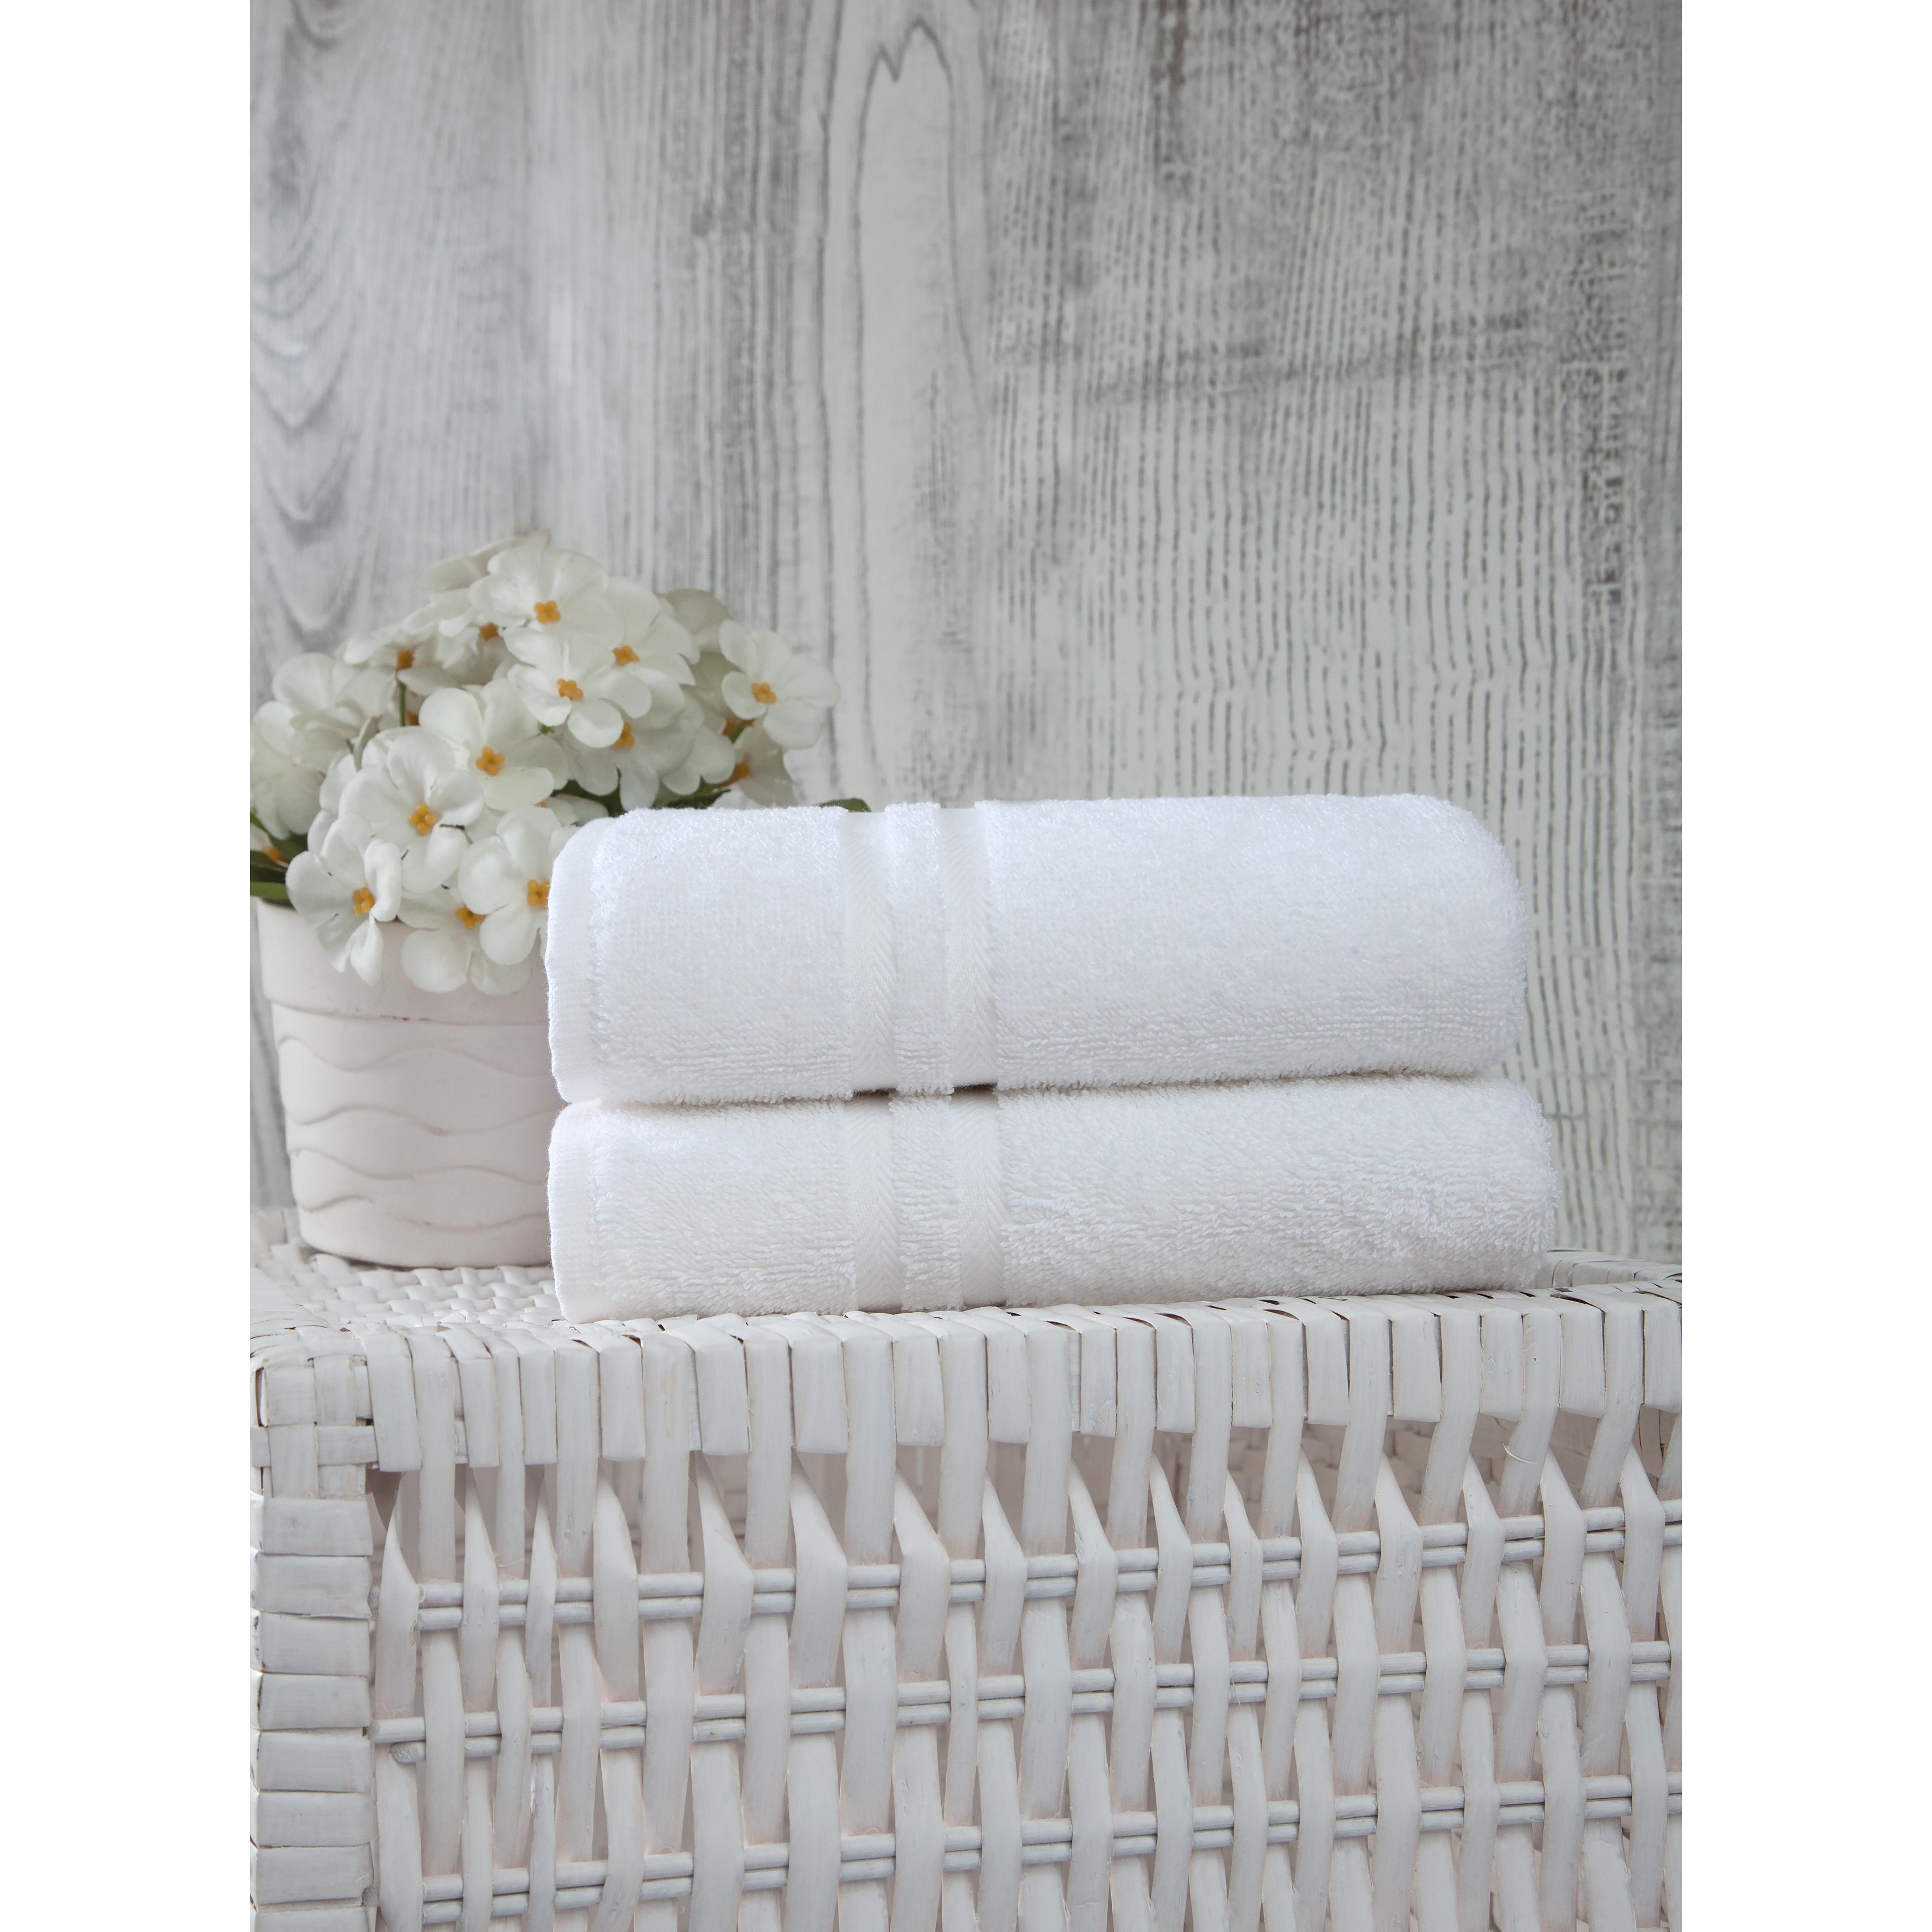 https://ak1.ostkcdn.com/images/products/is/images/direct/69de4bb0e3a7382e3d9dbe13828608de4c4eeafa/Ozan-Premium-Home-100%25-Turkish-Cotton-Sienna-Luxury-Collection-Hand-Towels-%28Set-of-2%29.jpg